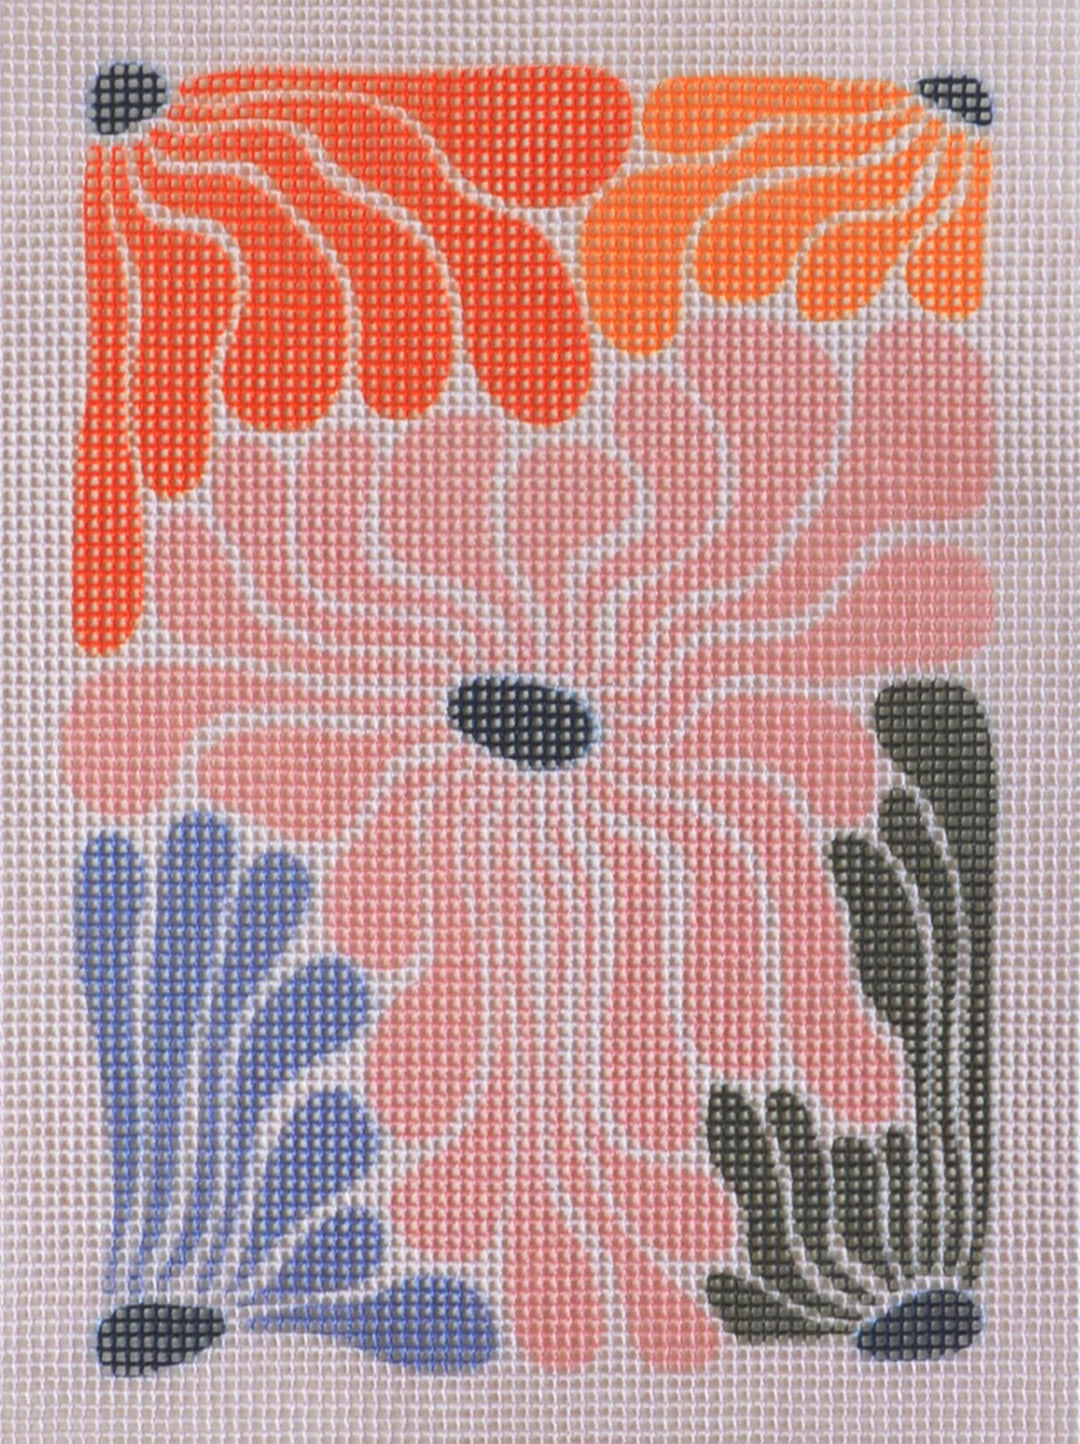 Basaloreak floral modern design needlepoint canvas